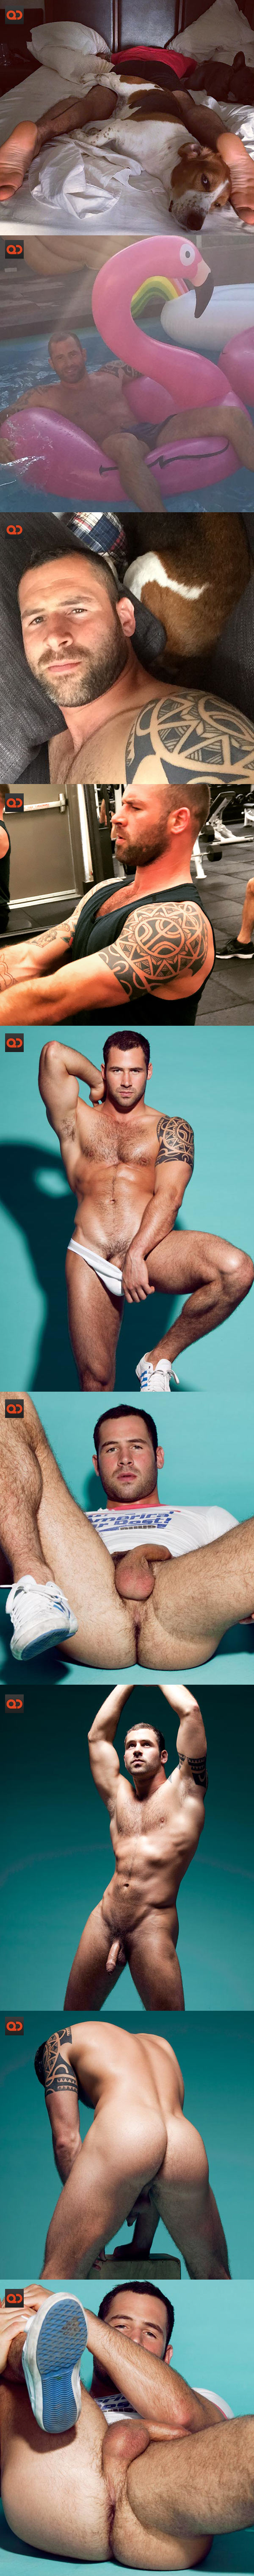 Split Identity: Gay Porn Star Ryan Stack Vs Steve Brockman, Russell Tovey's Future Husband!